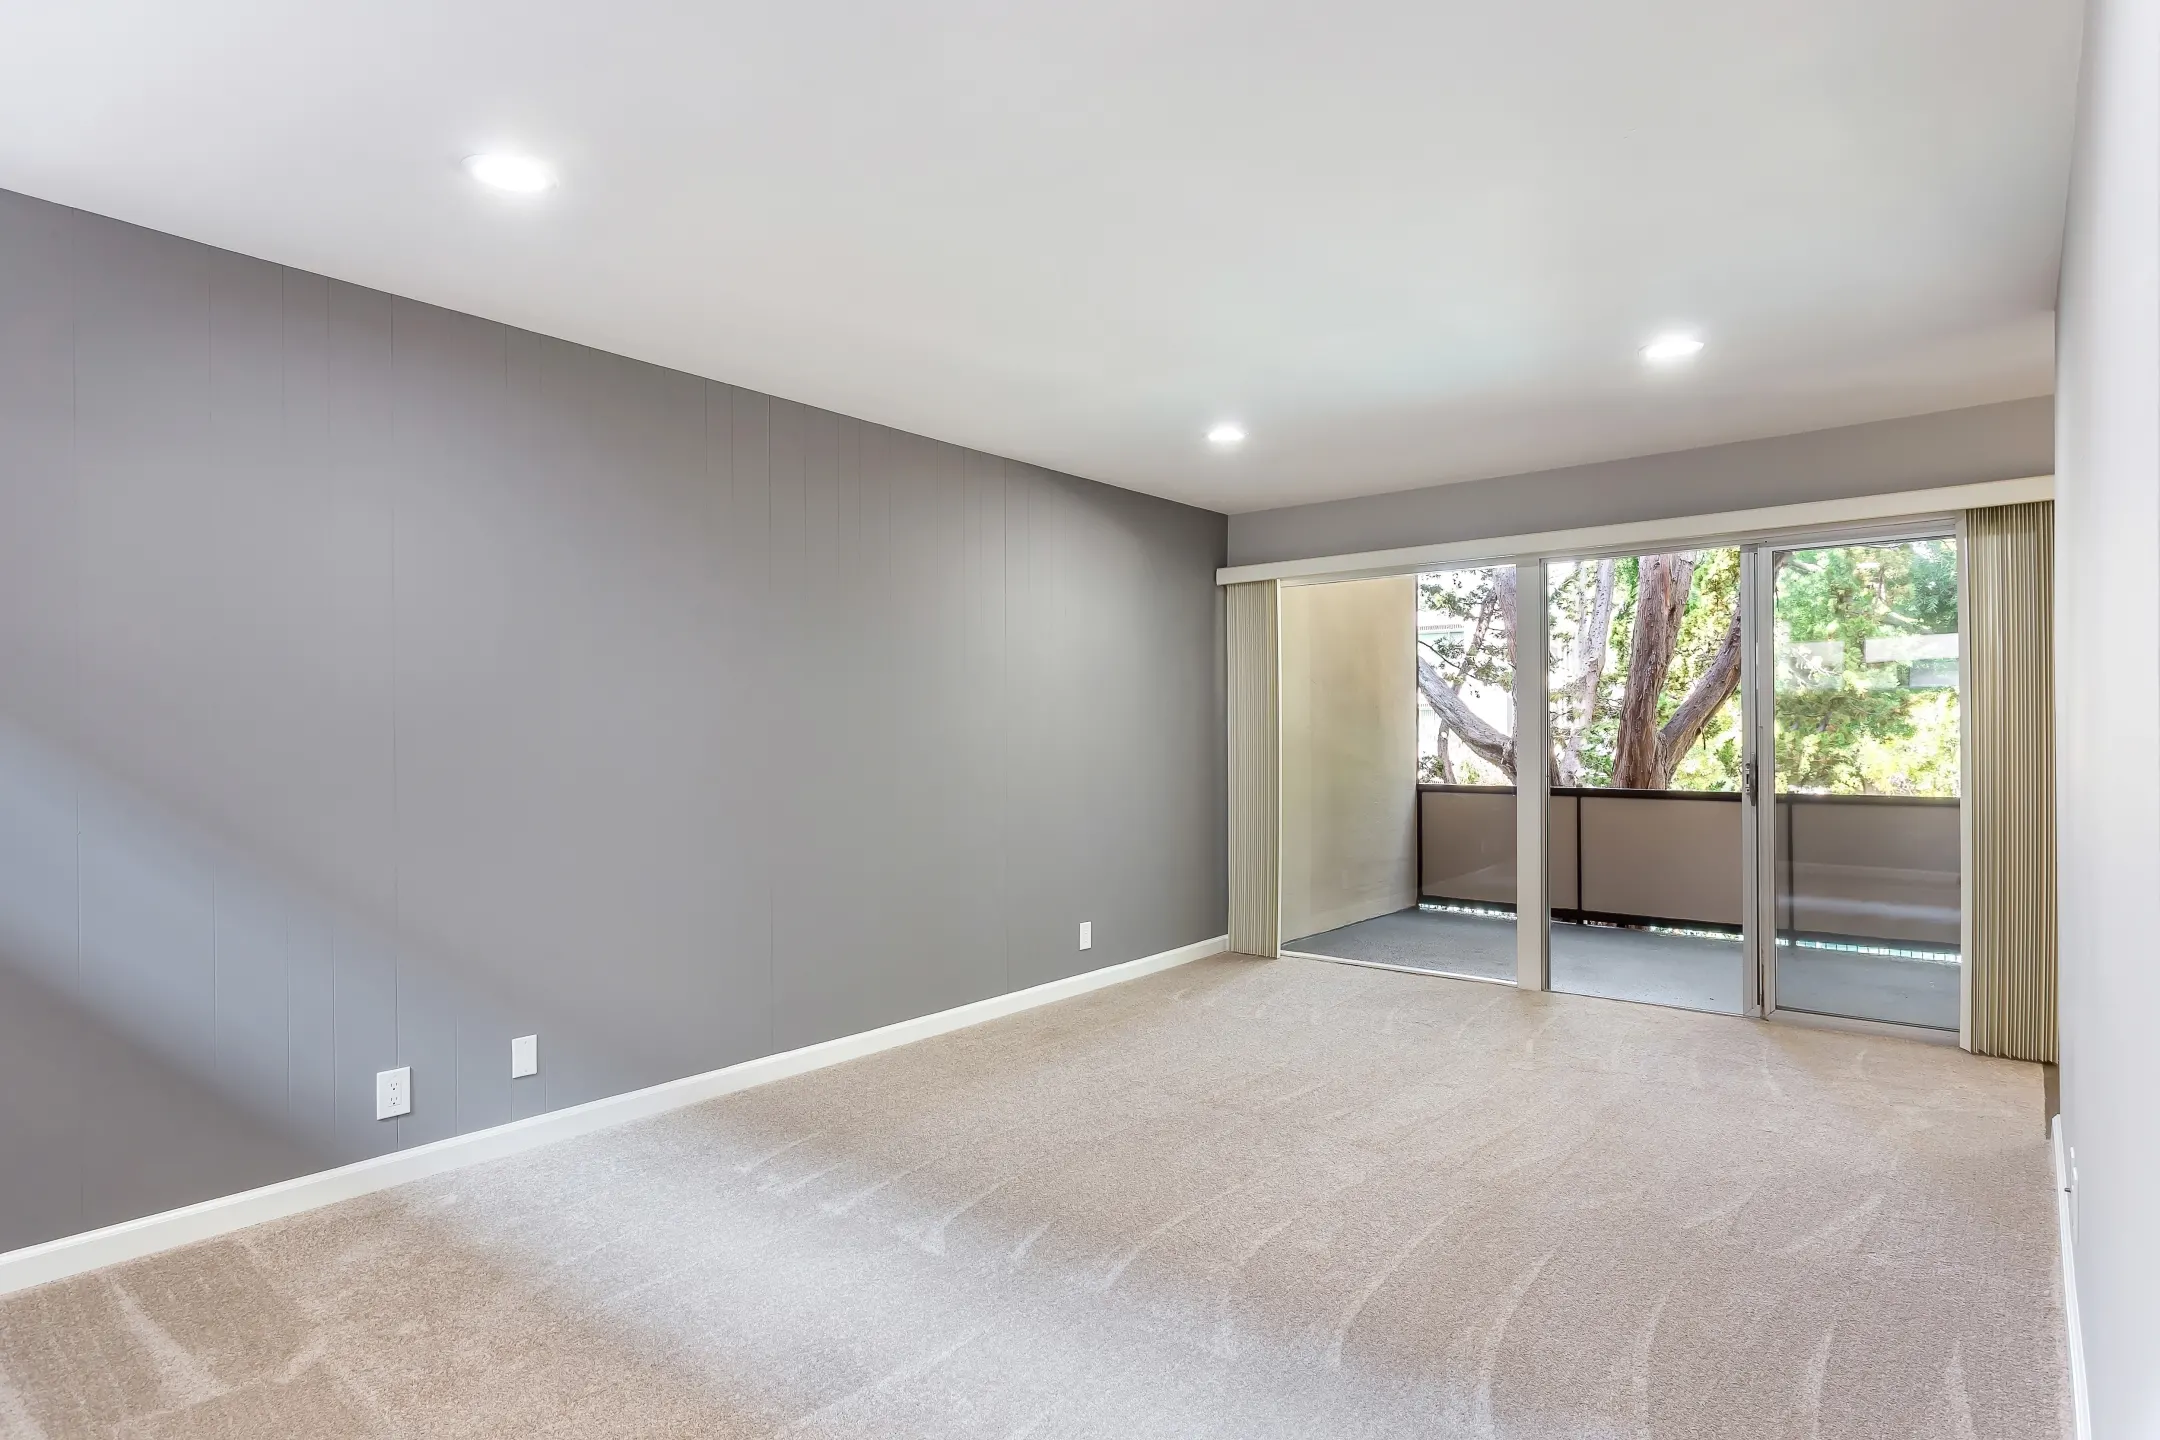 Living Room - Parksquare Apartments - Palo Alto, CA